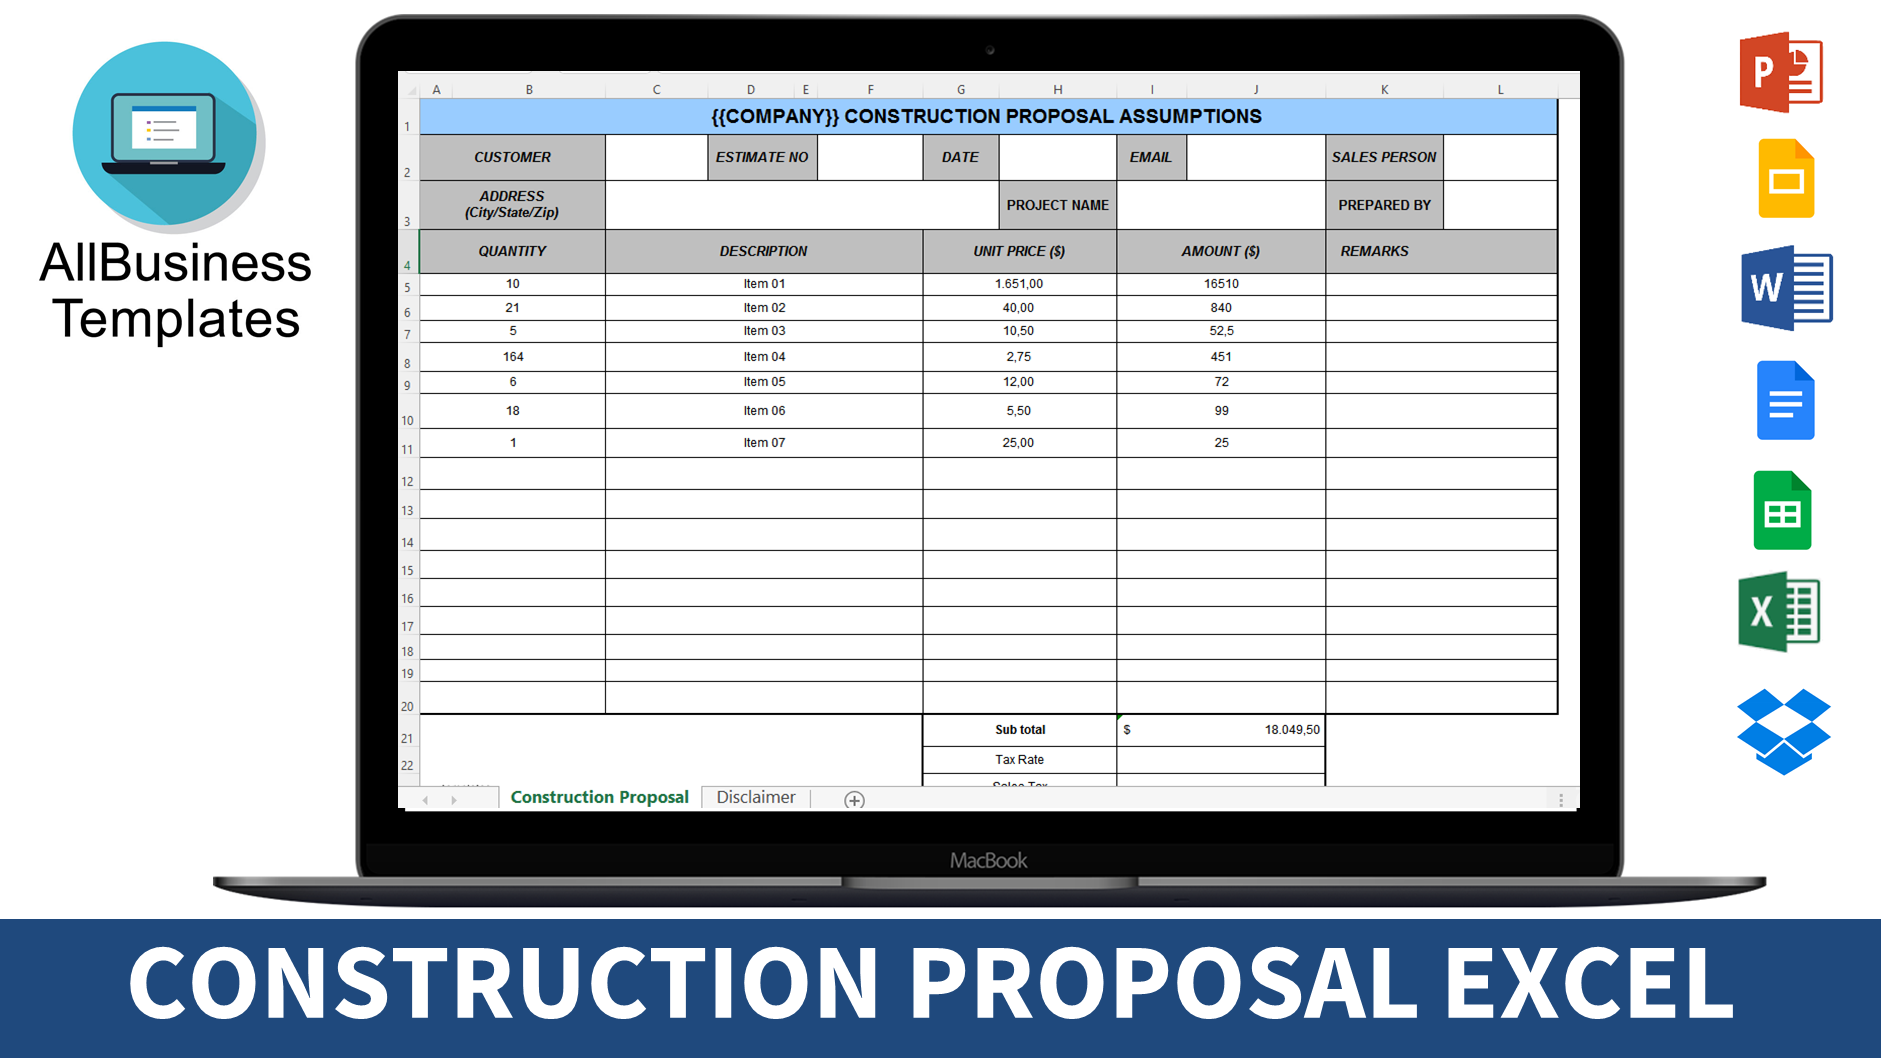 Construction Proposal Assumptions Excel 模板